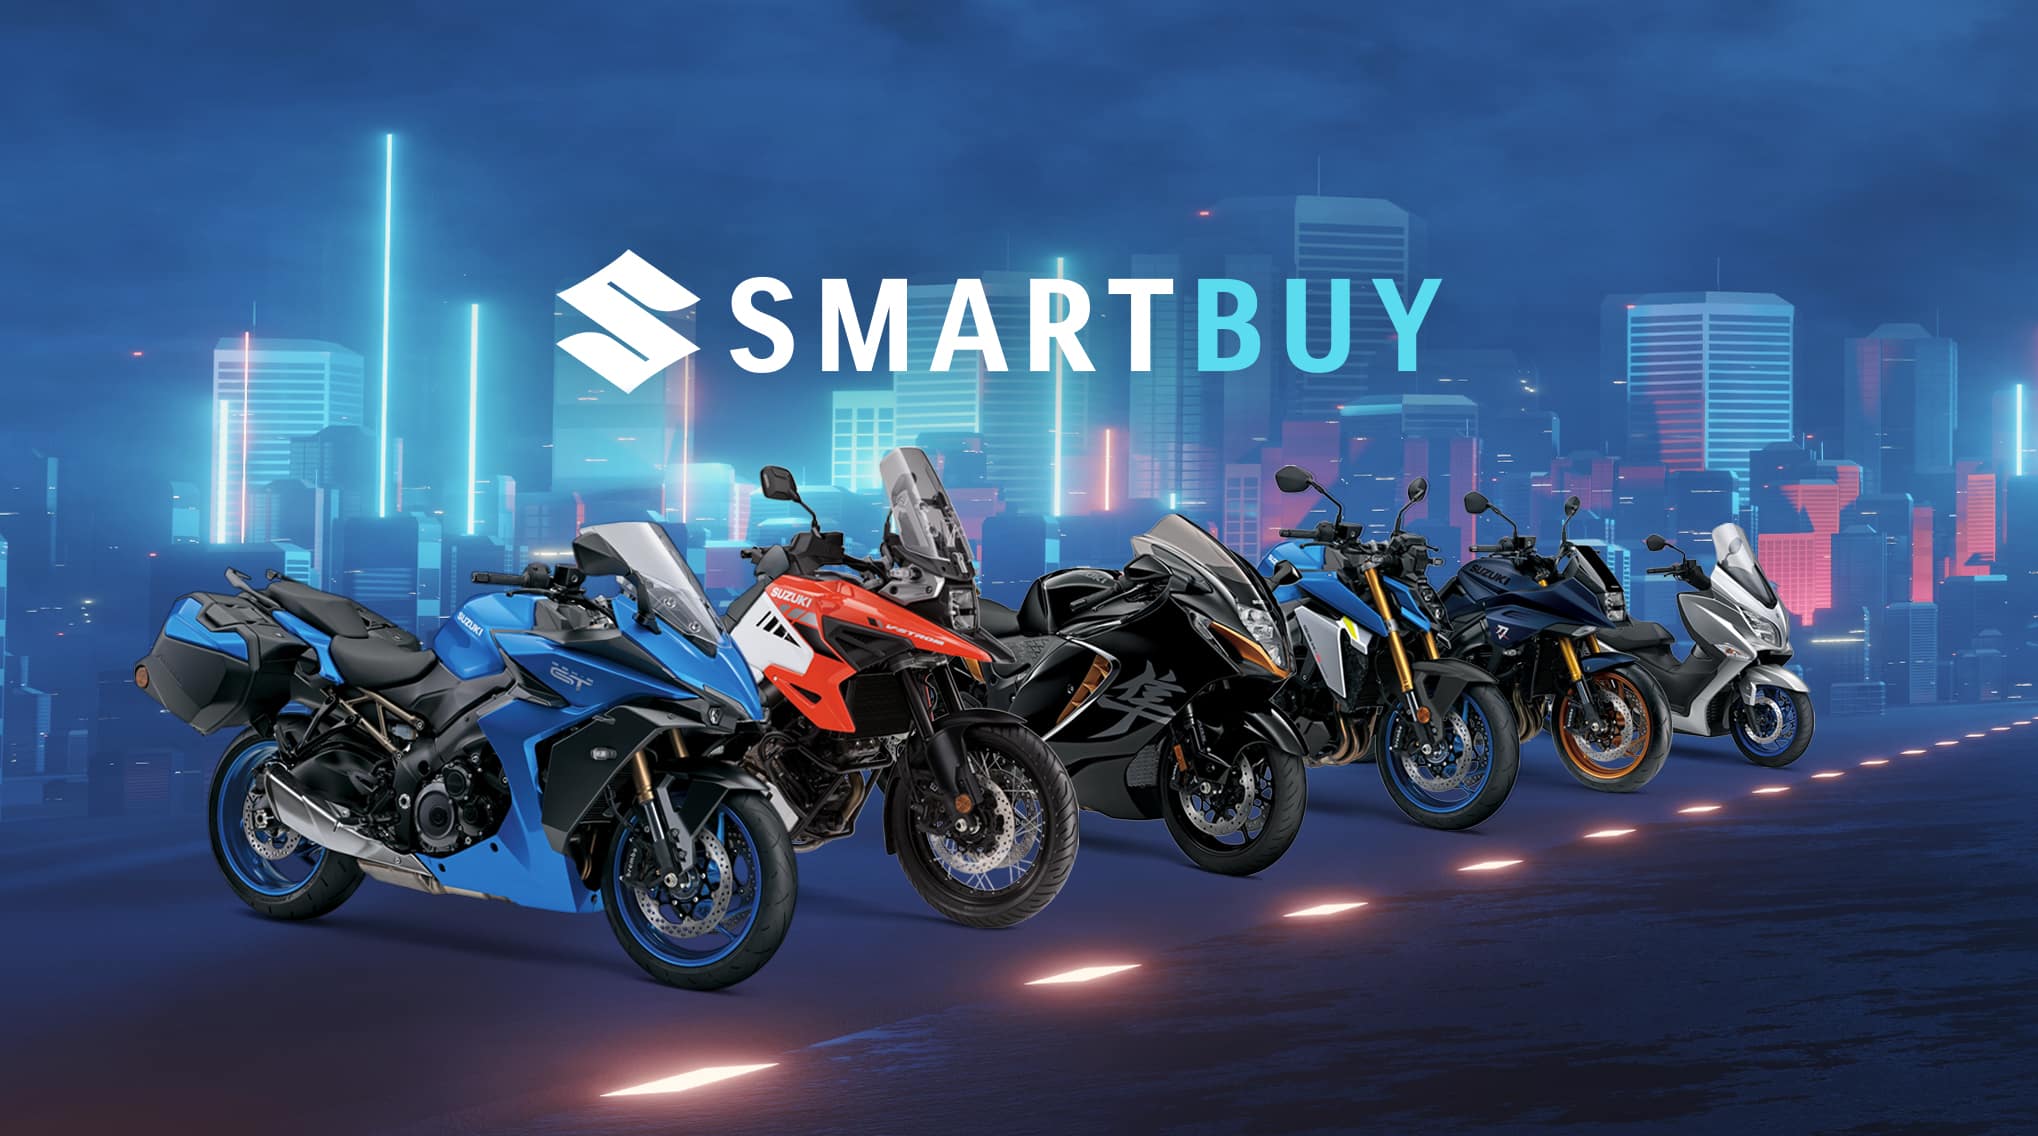 Suzuki smart buy